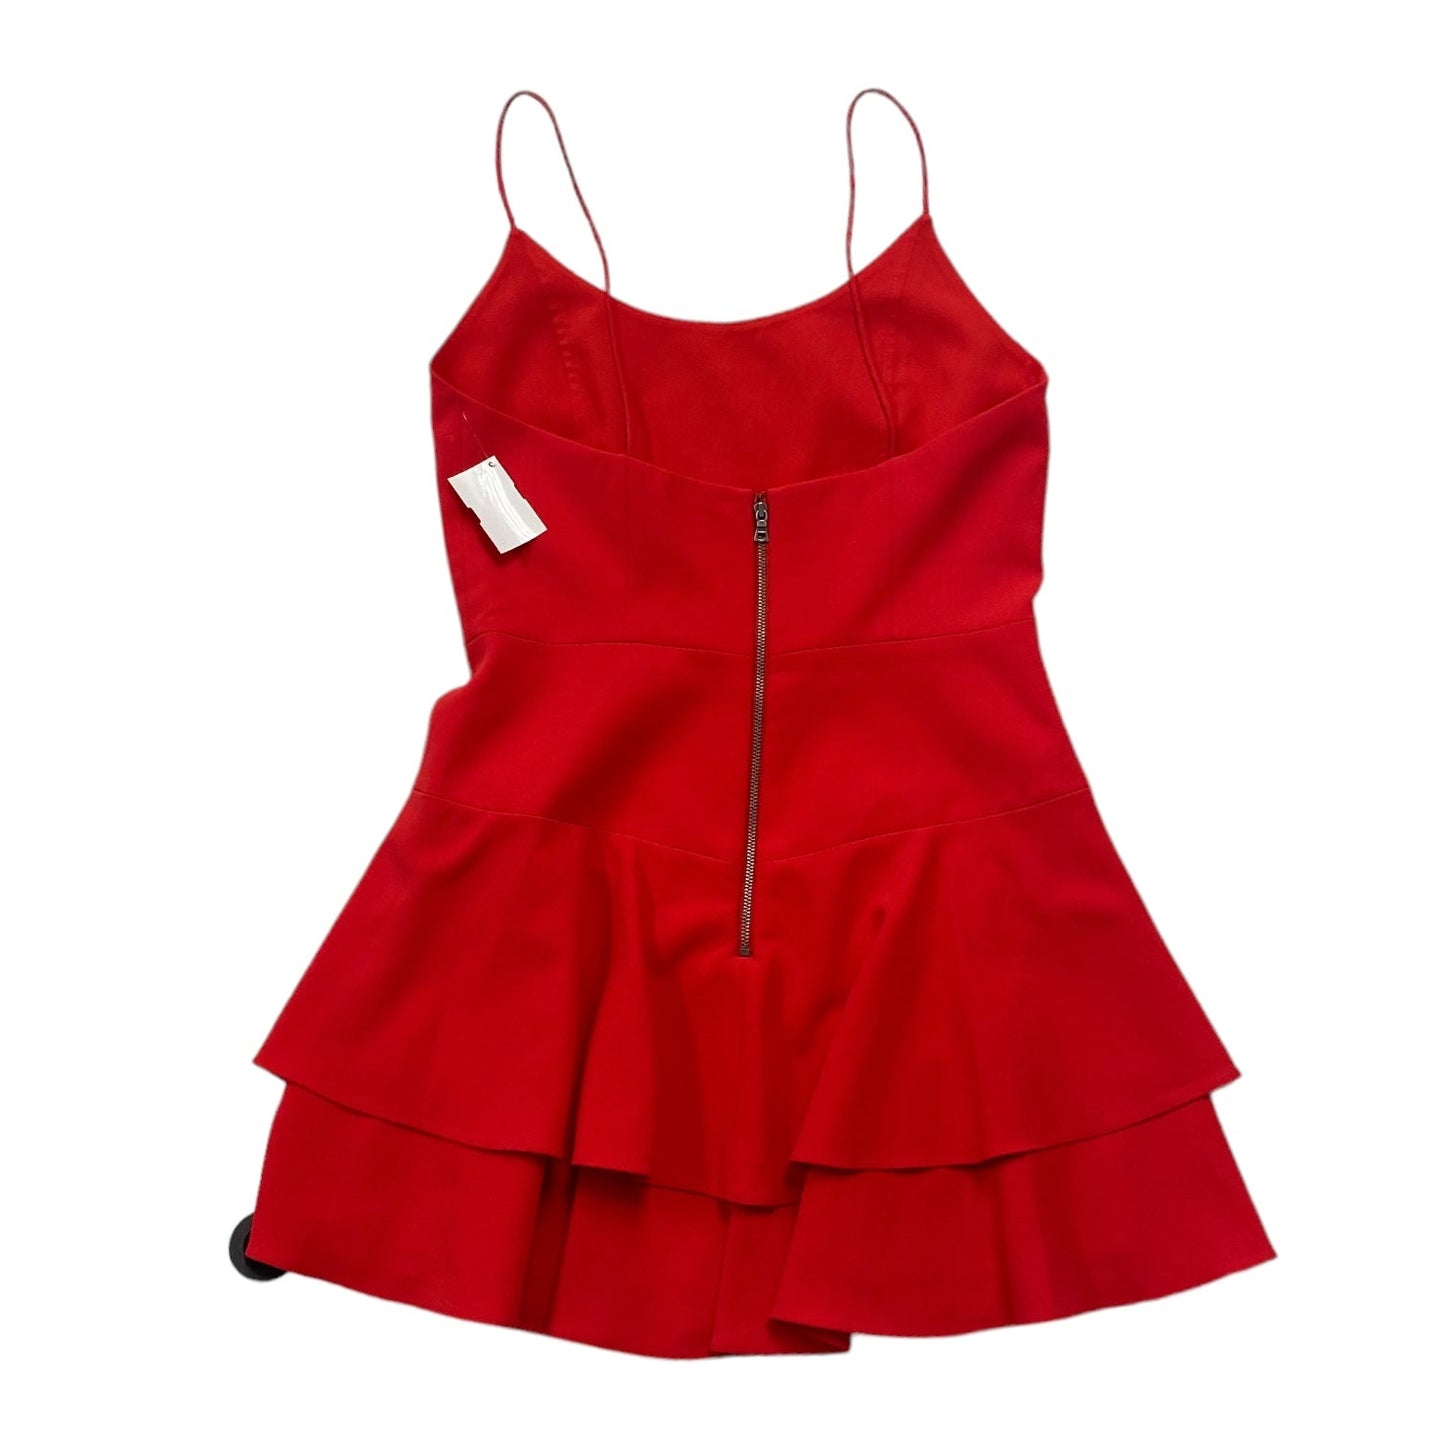 Red Dress Designer Alice + Olivia, Size 8